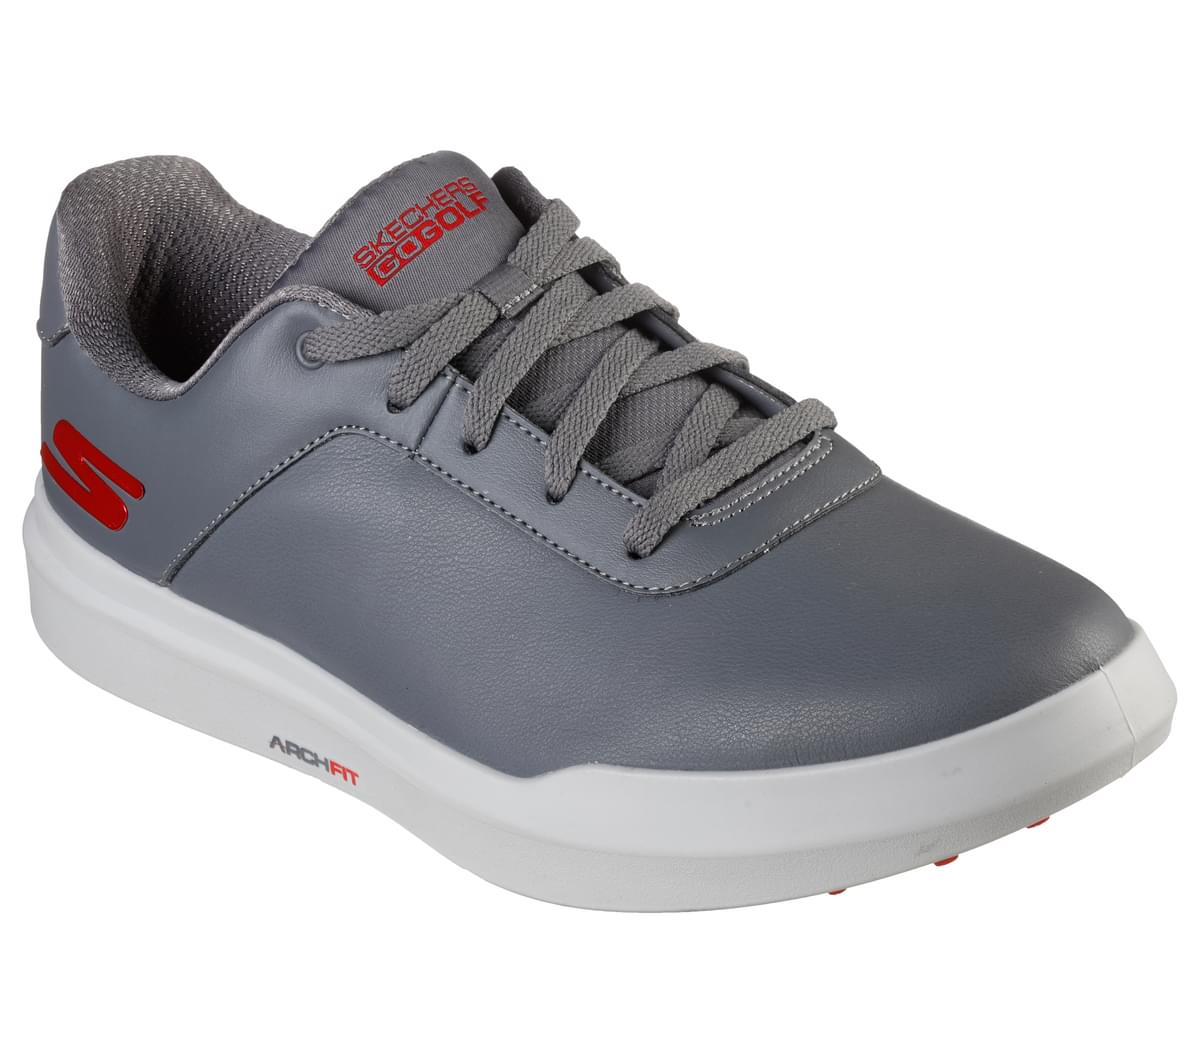 Skechers Go Golf Drive 5 Spikeless Golf Shoe 214037 Grey / Red 7 